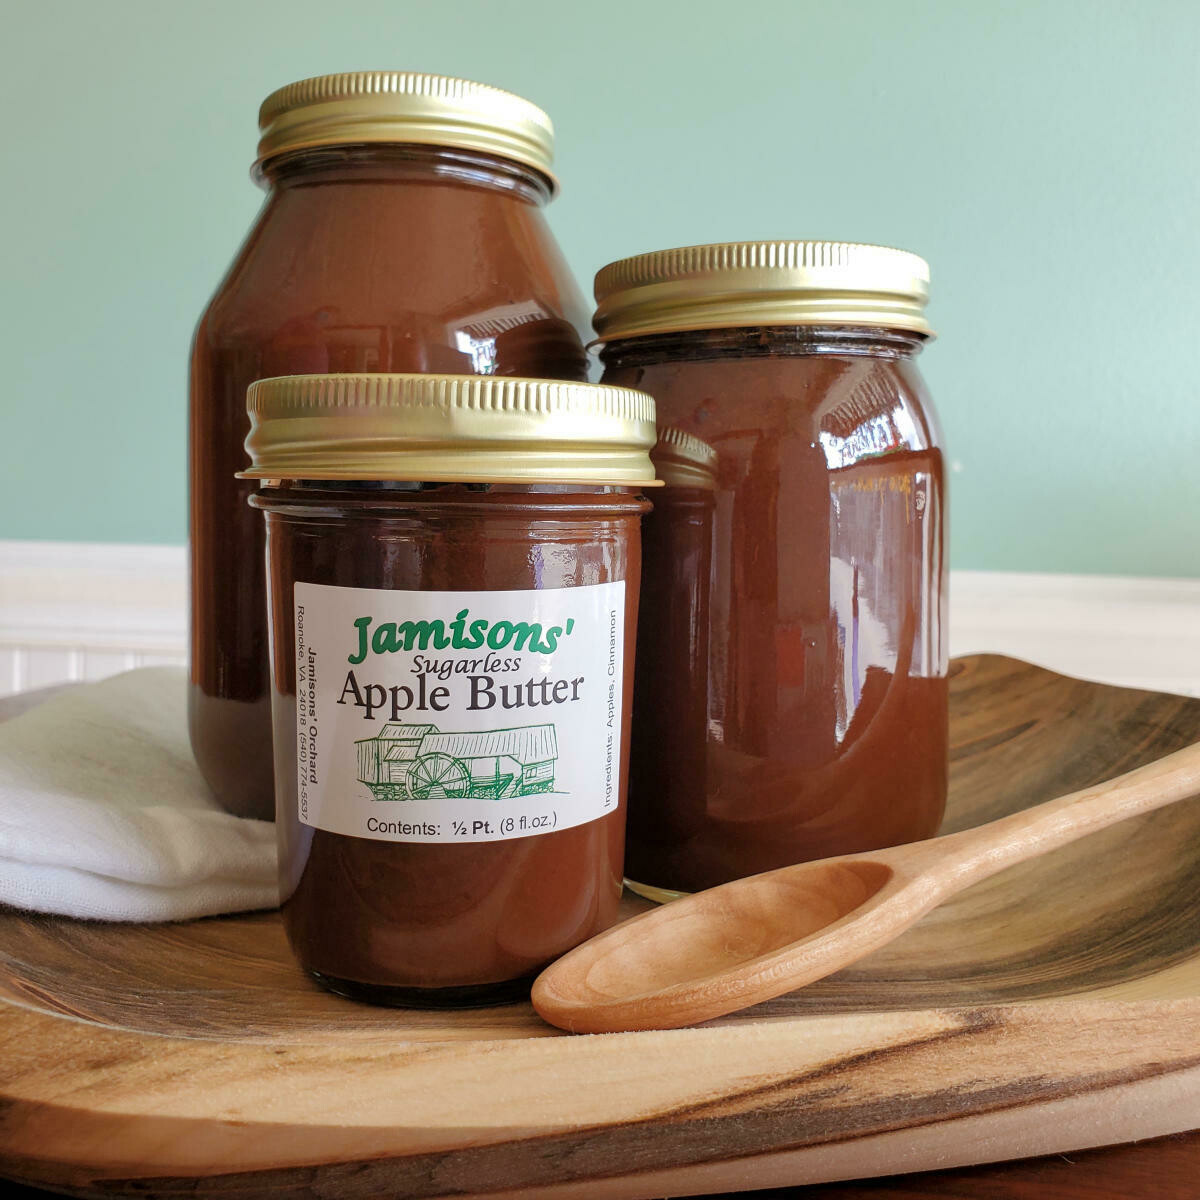 Jamisons' Homemade Sugarless Apple Butter